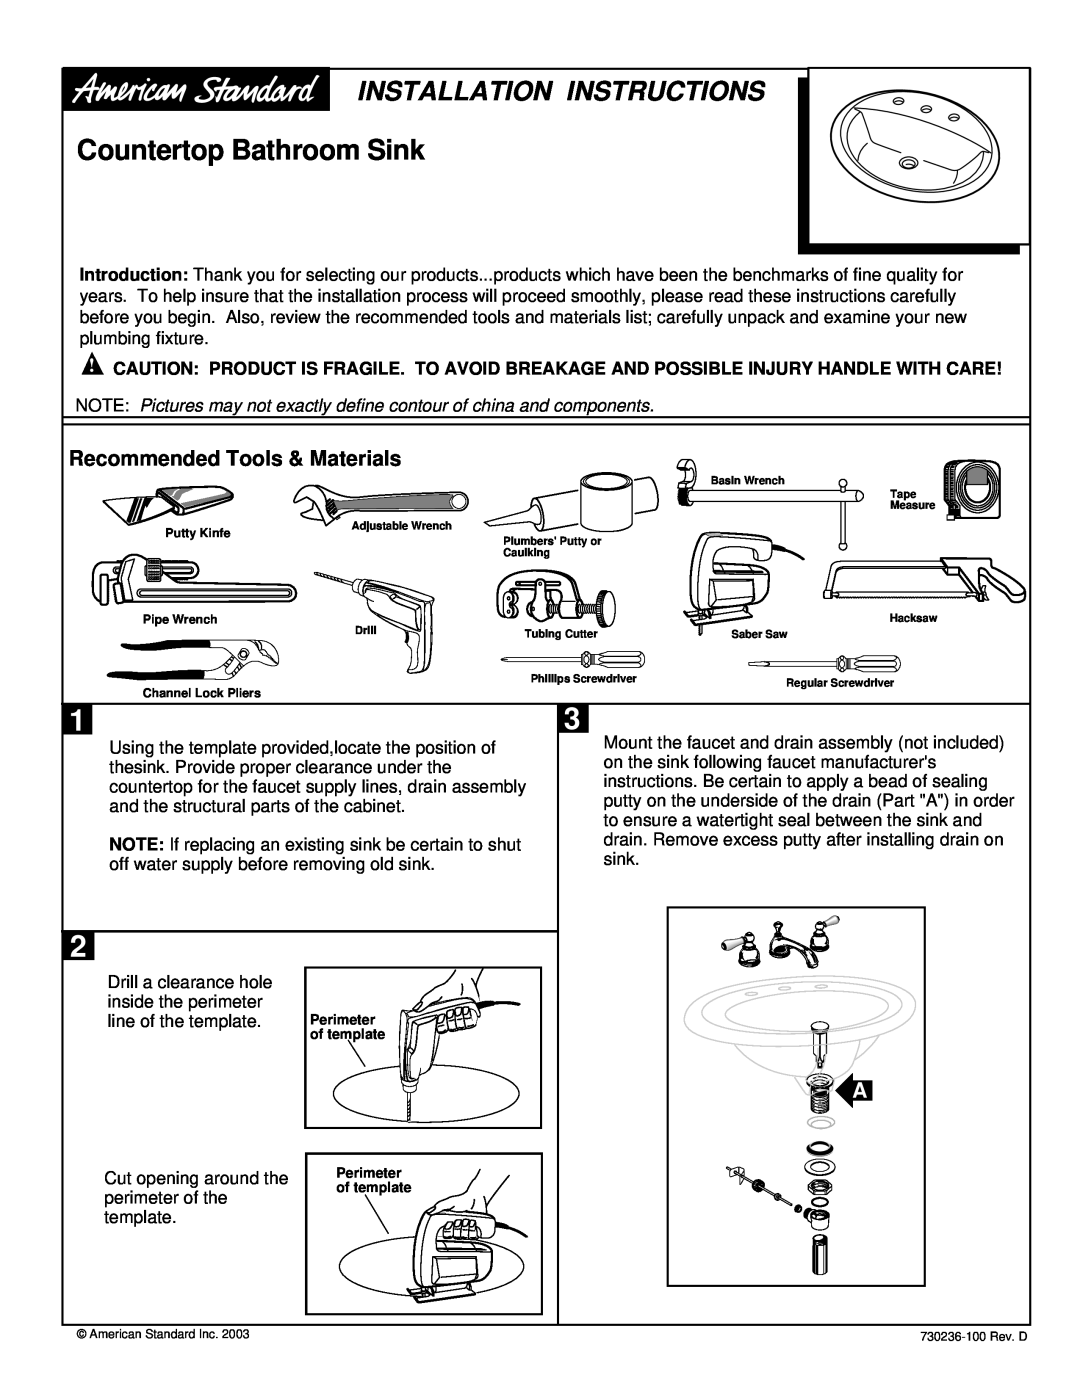 American Standard Countertop Bathroom Sink installation instructions Installation Instructions 